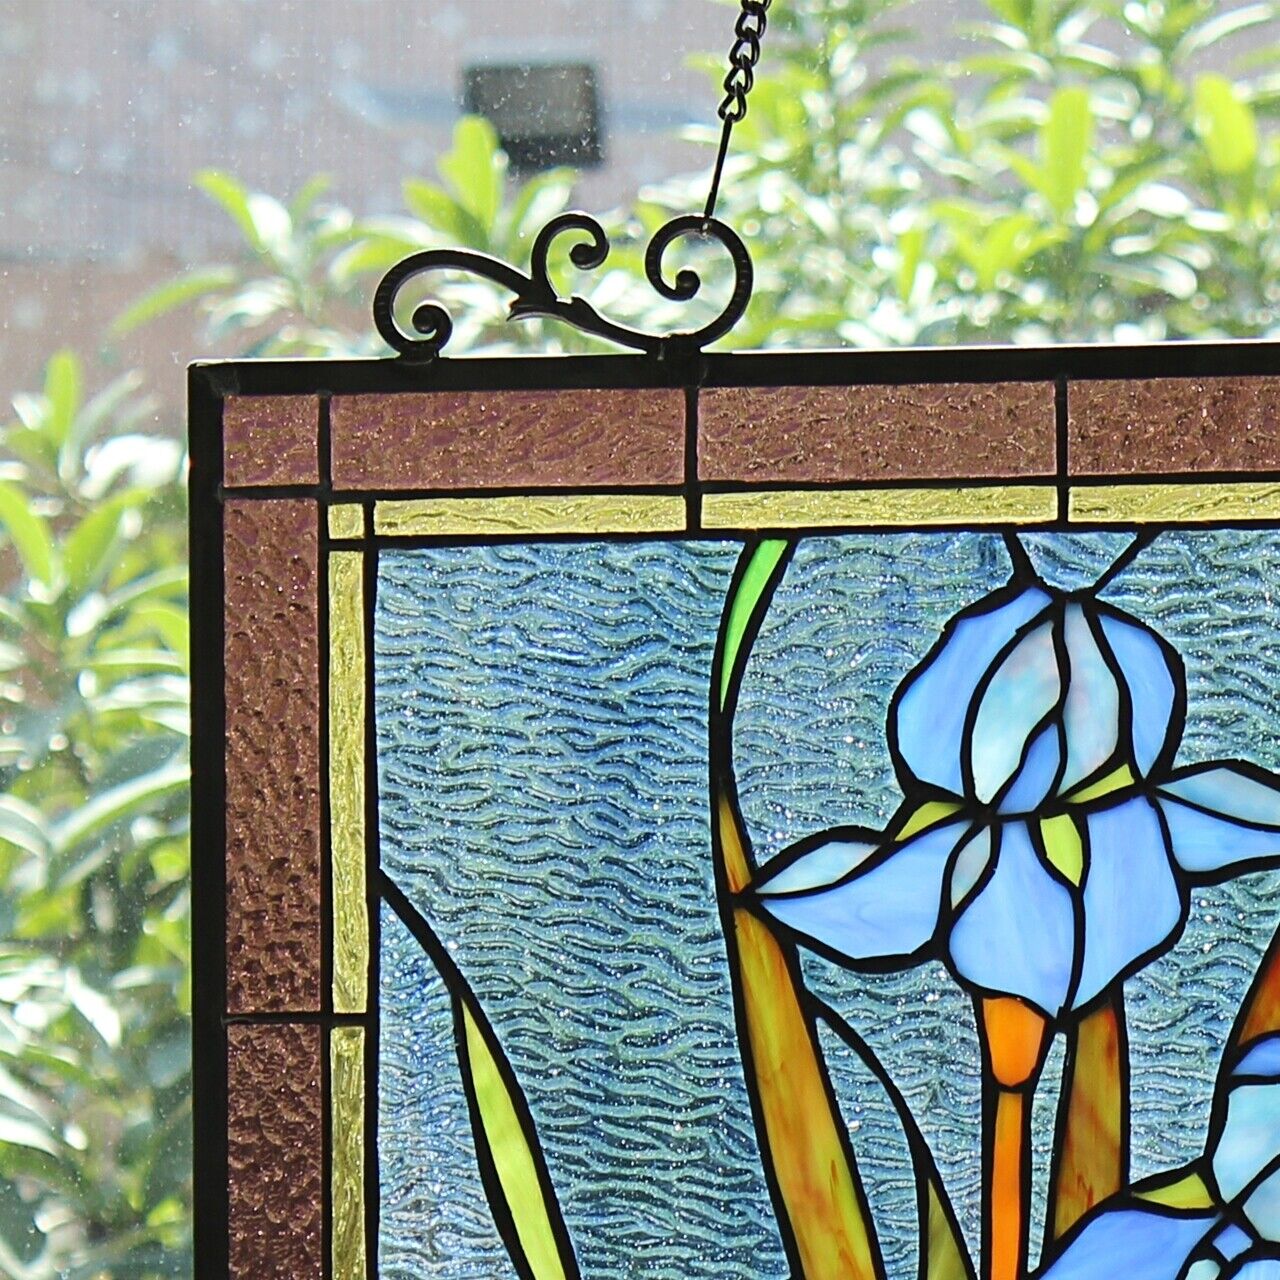 Antique Vintage Style 25" Iris Stained Glass Window Hanging Panel Suncatcher